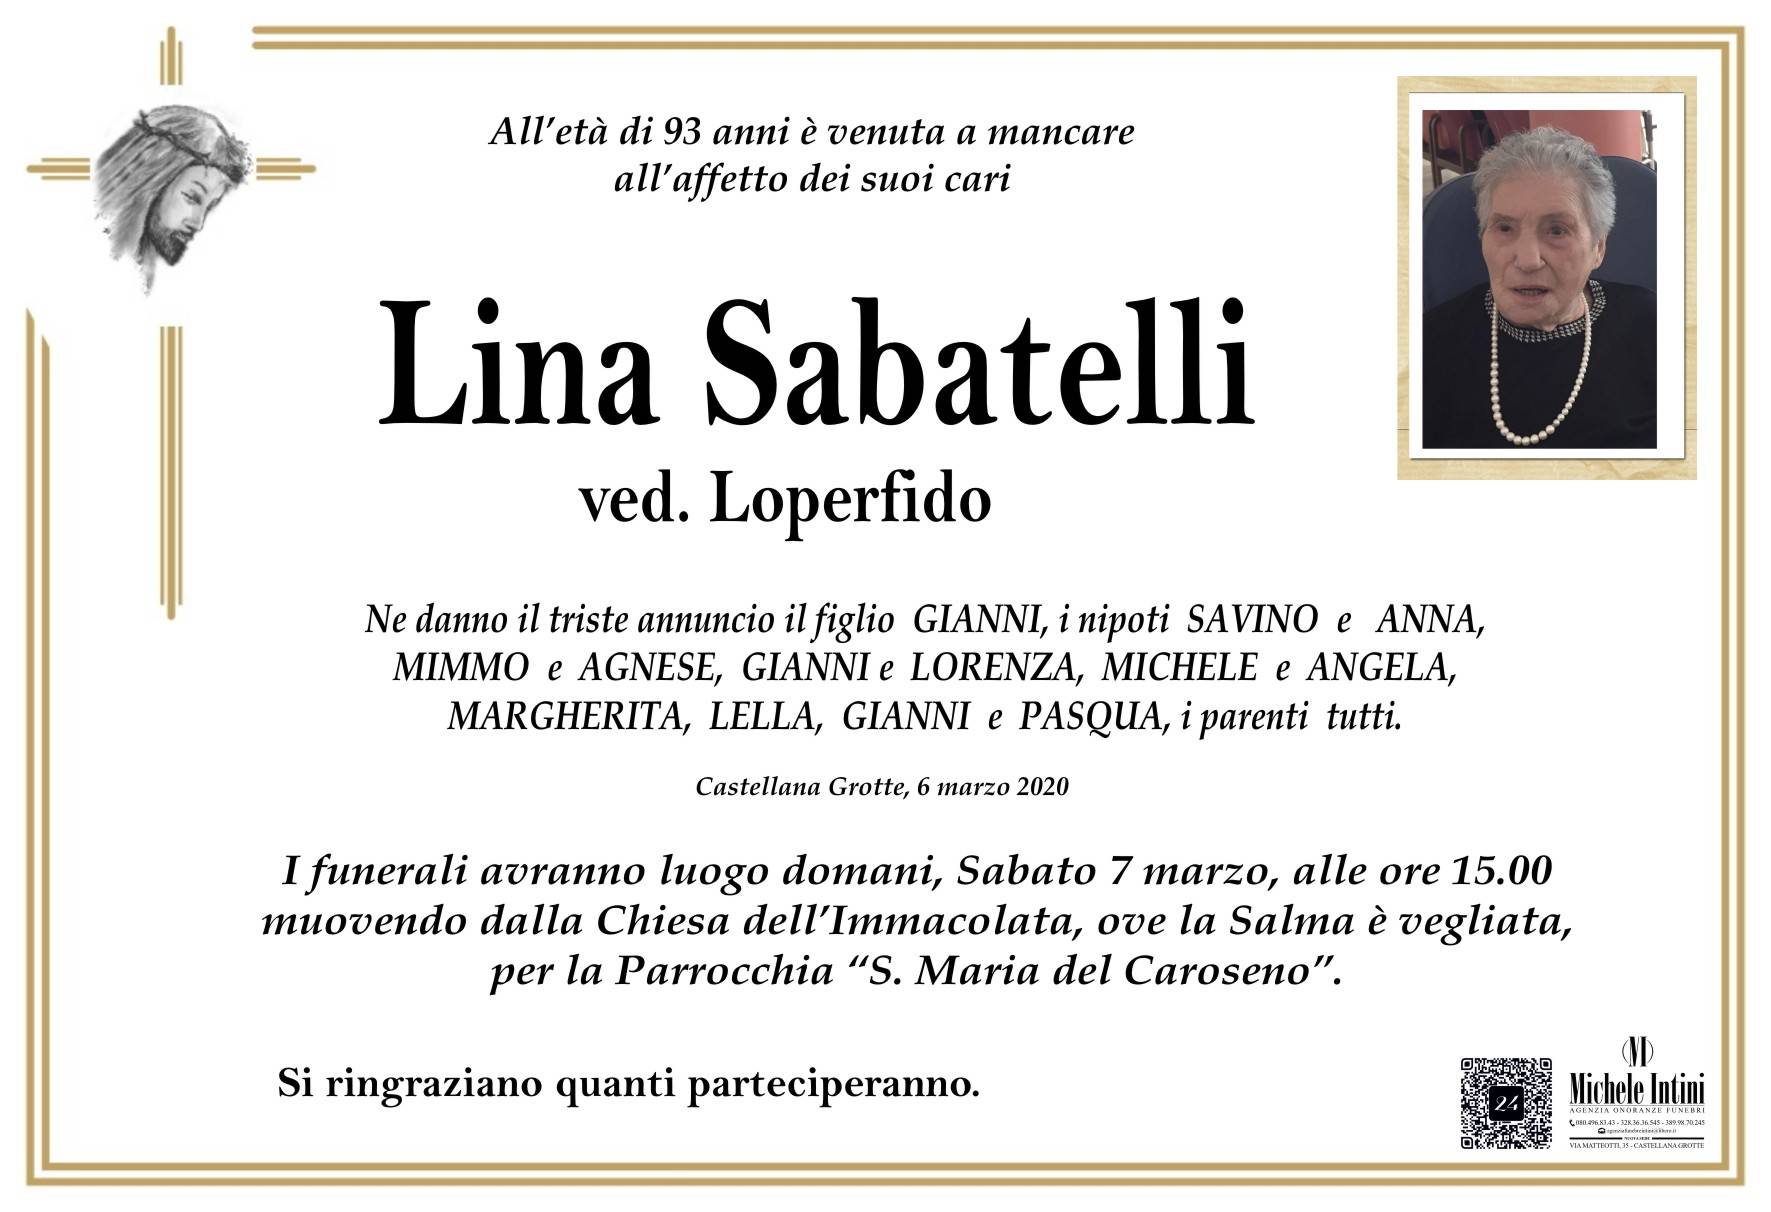 Lina Sabatelli